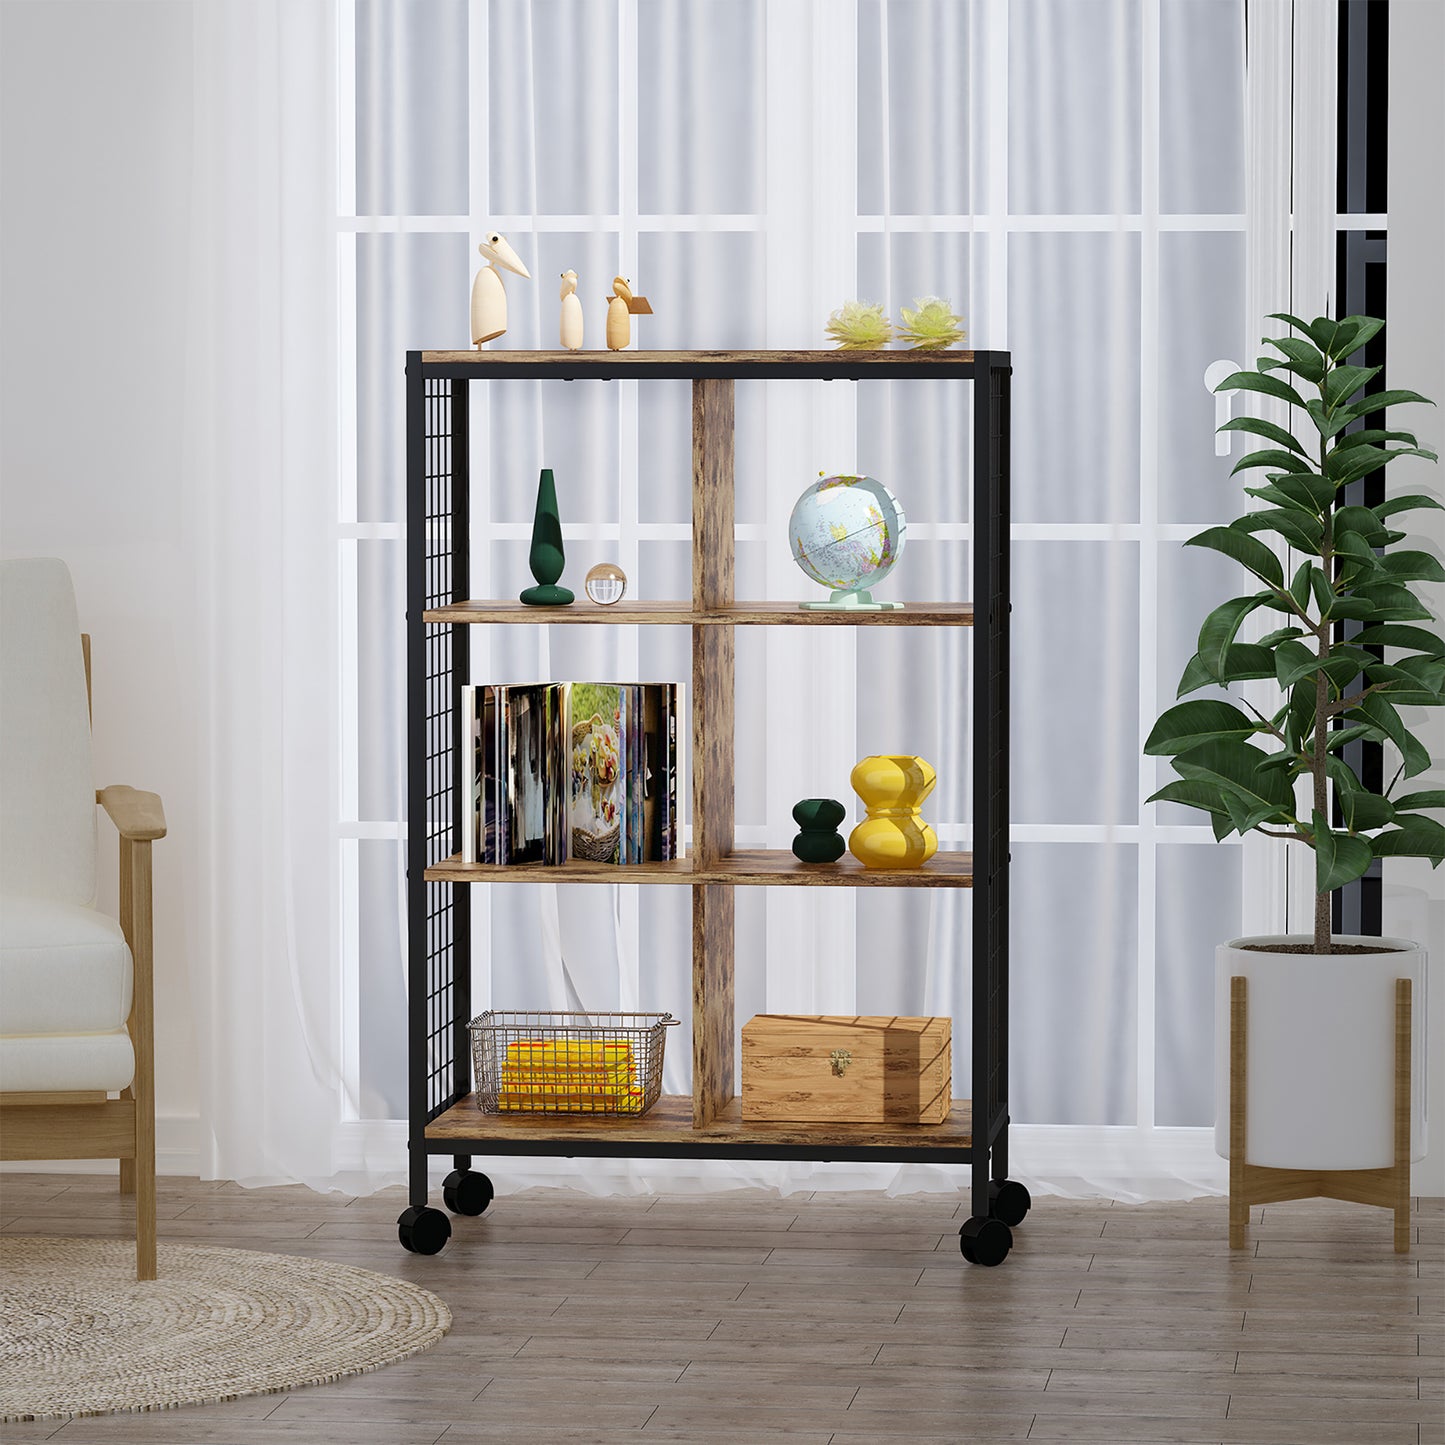 Nordic Living Room Bedroom Wood Metal Movable Bookshelf Storage Rack Srorage Shelf With Wheels